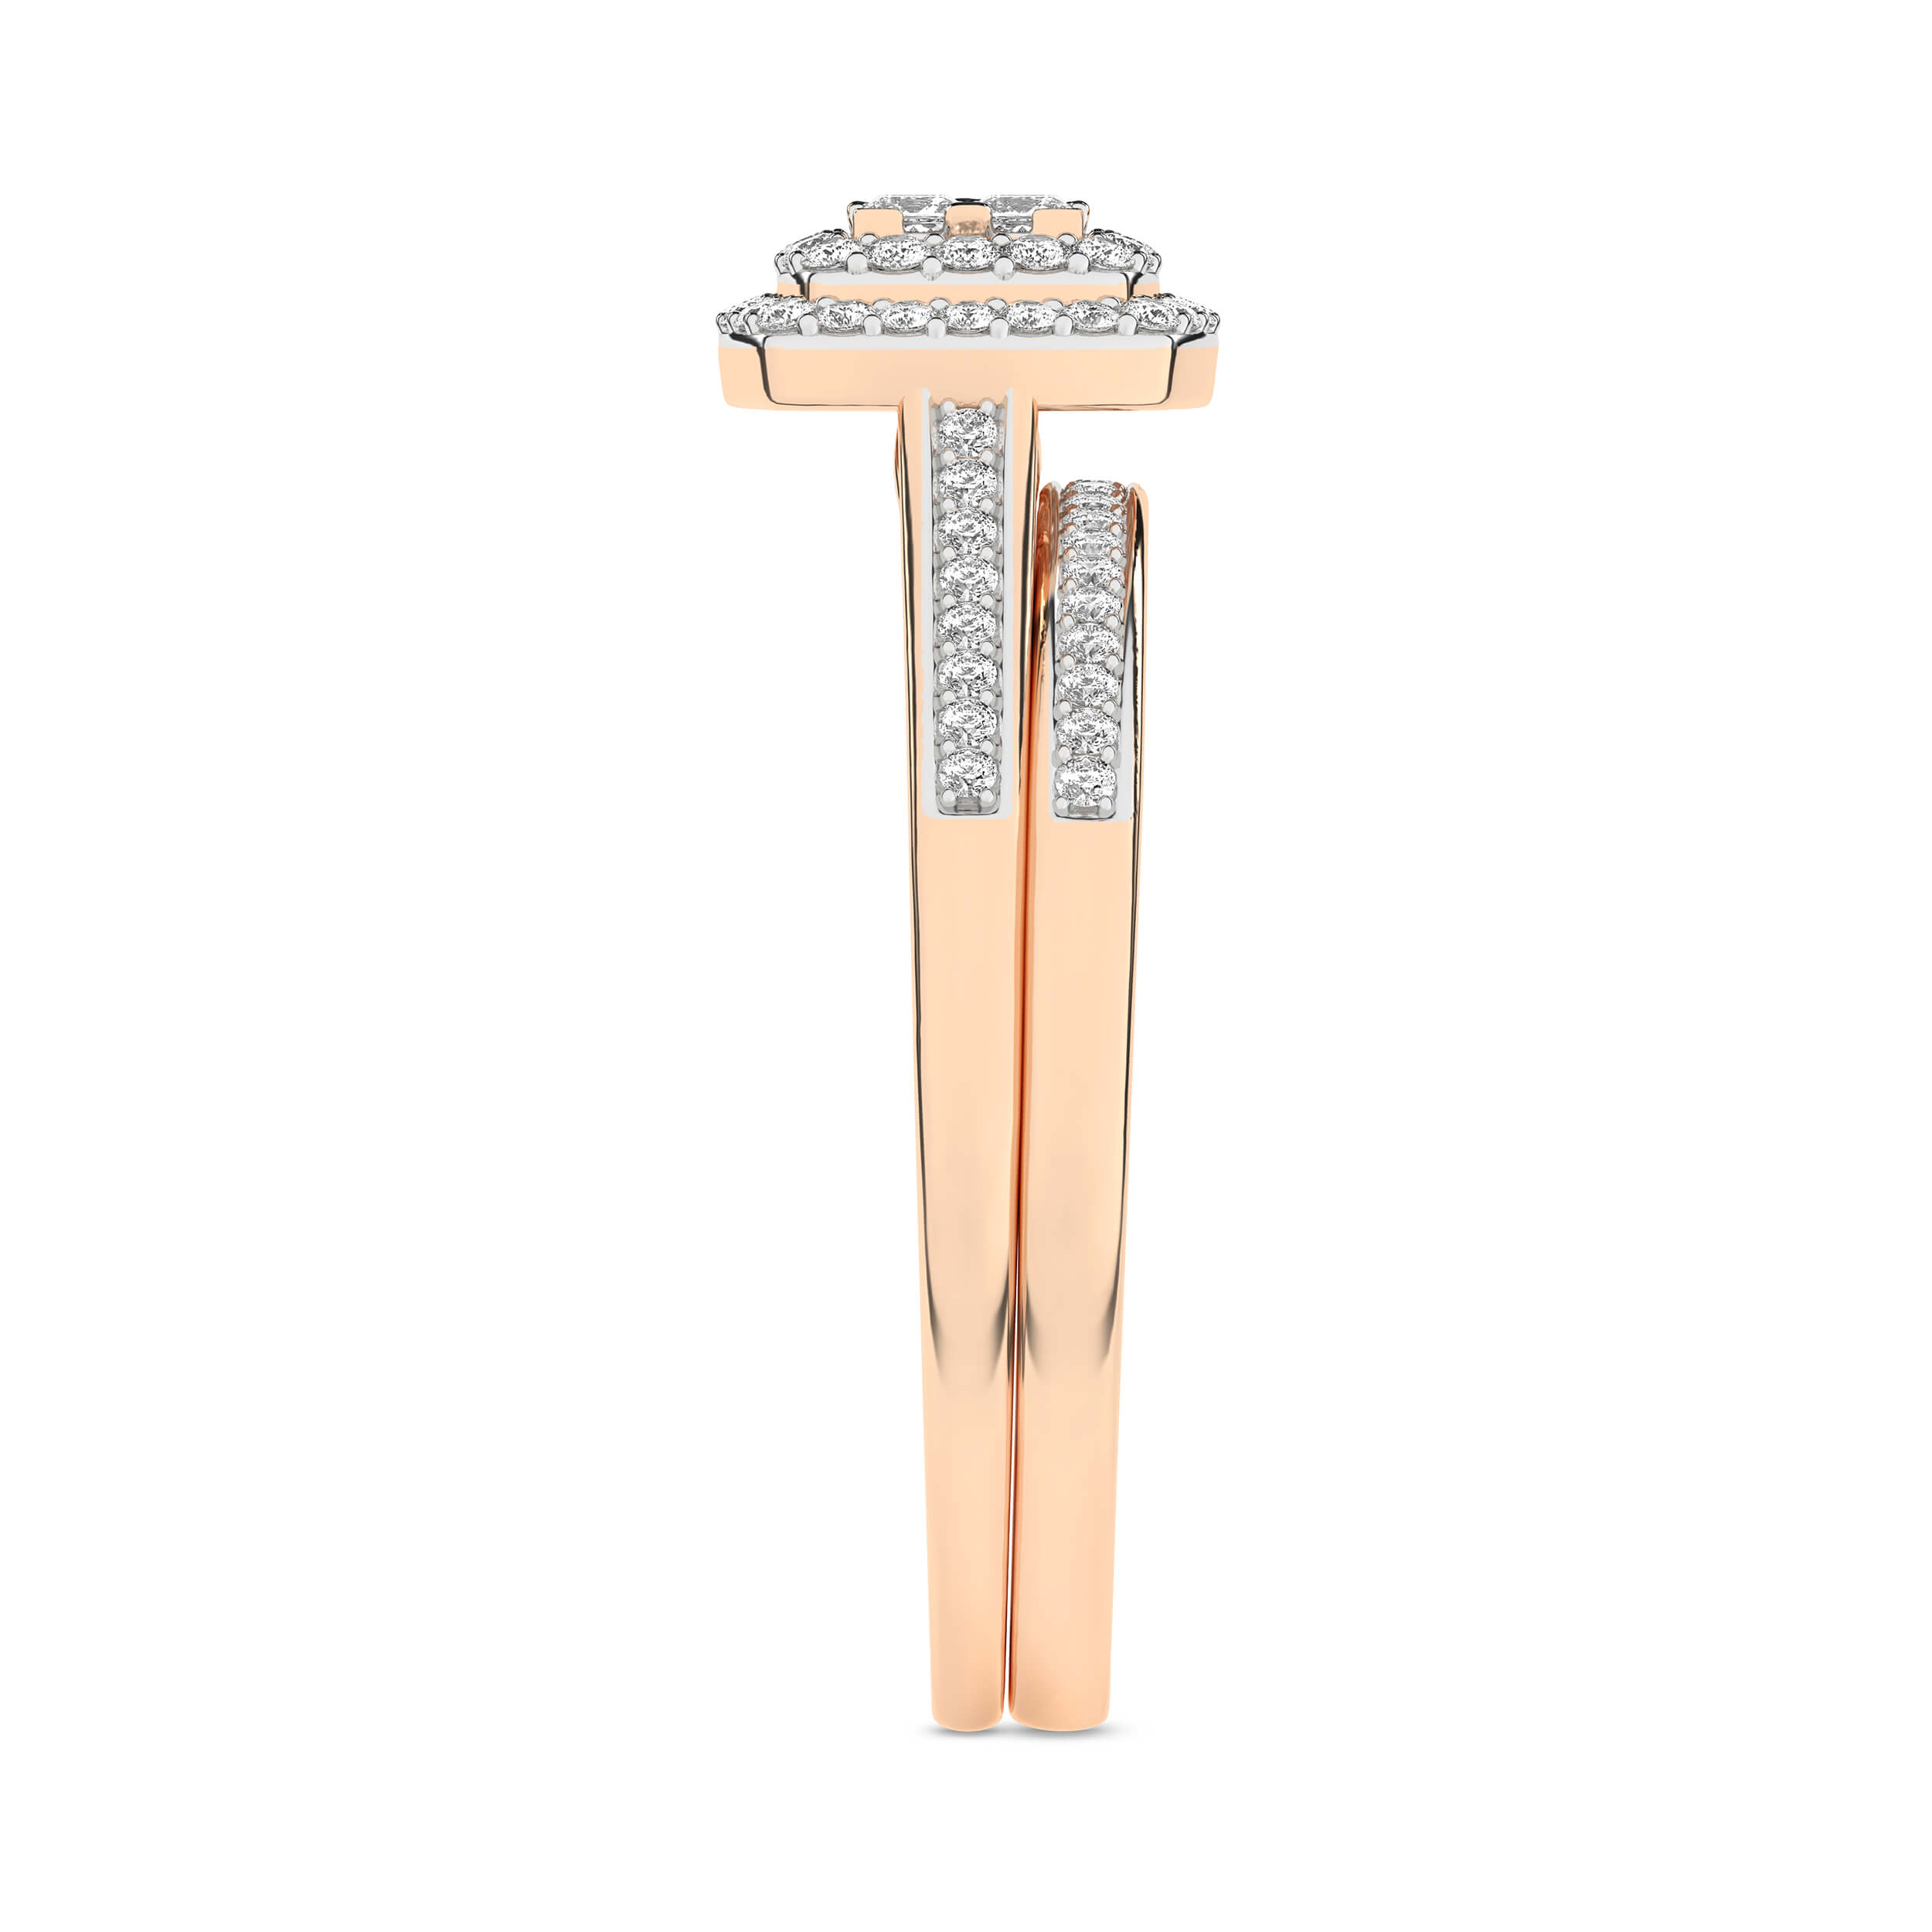 Inel de logodna din Aur Roz 14K cu Diamante 0.25Ct, articol RB13607, previzualizare foto 3